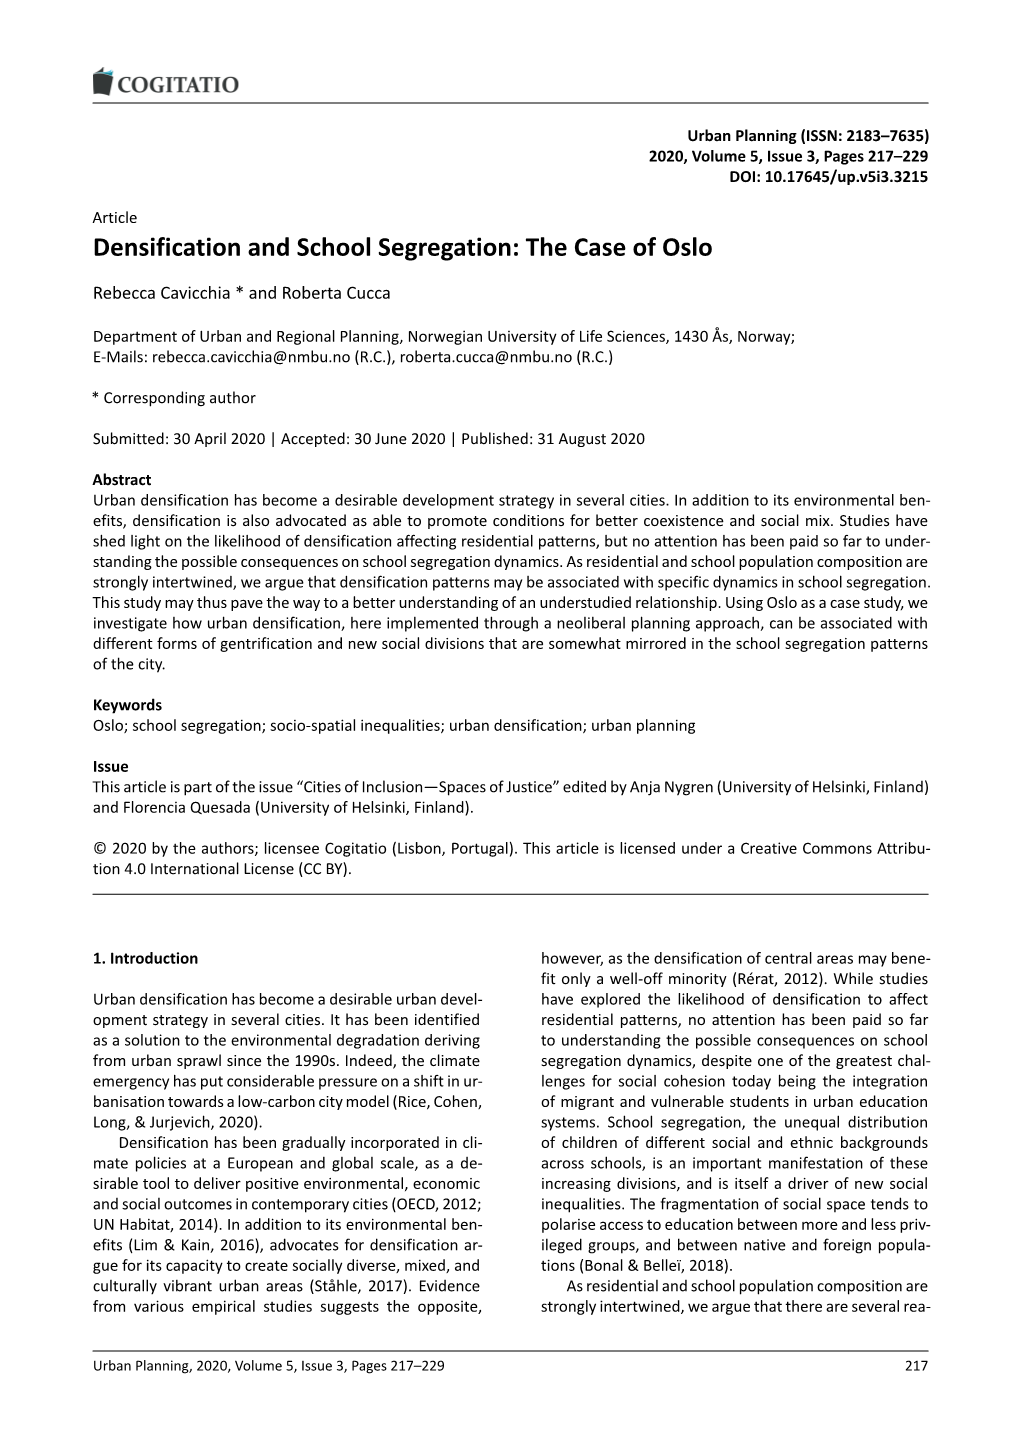 Densification and School Segregation: the Case of Oslo